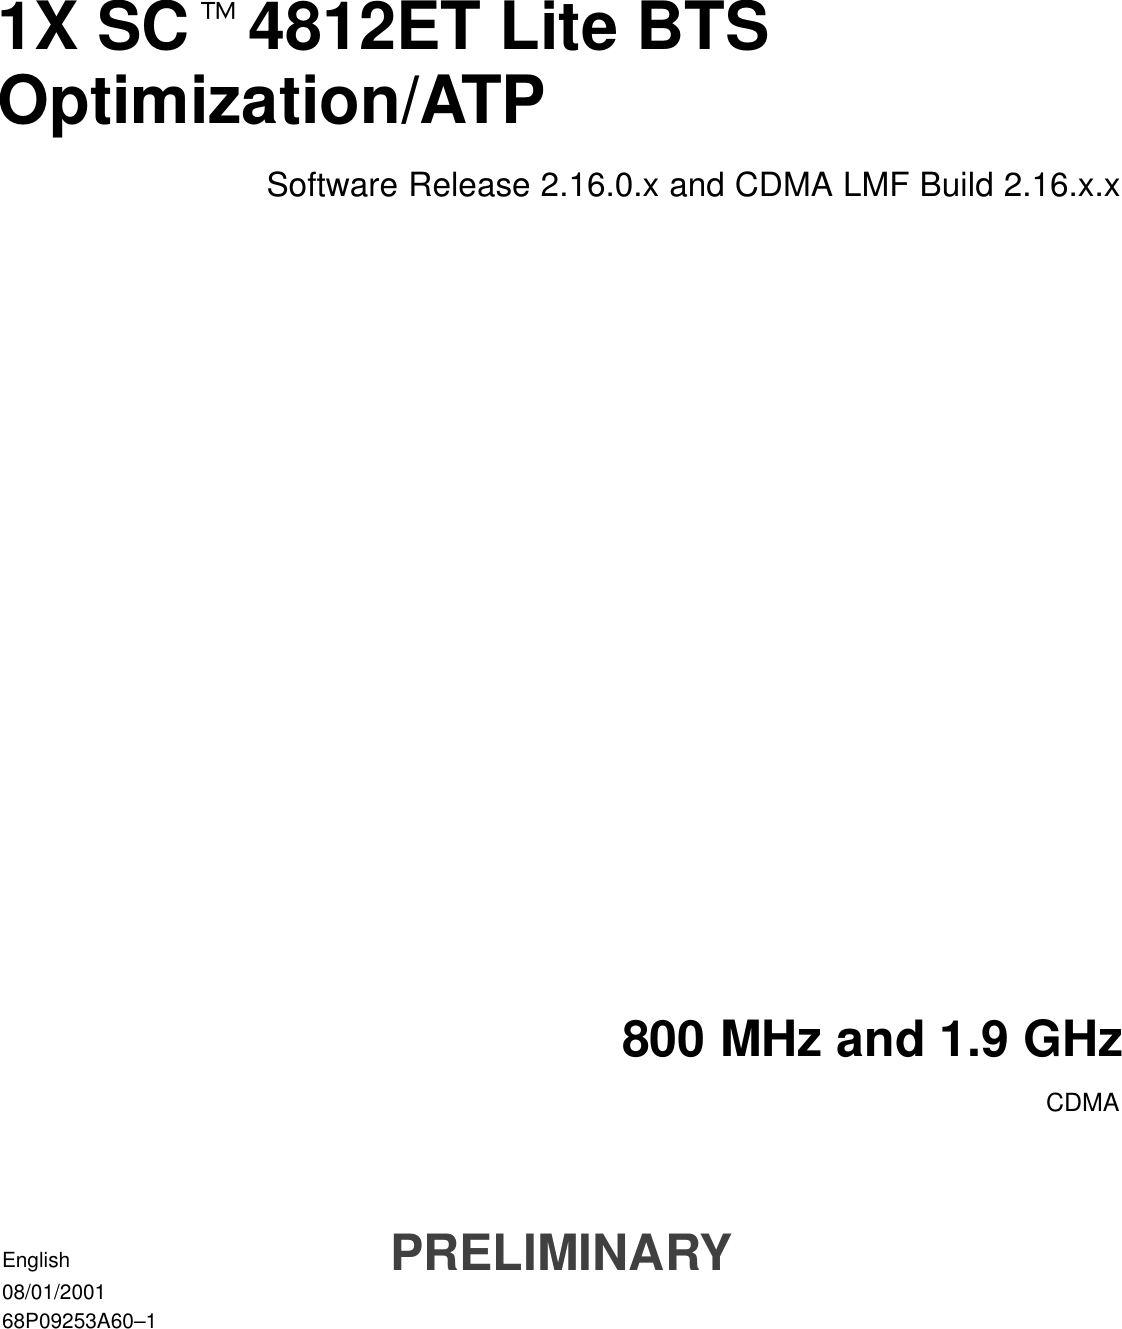 1X SCt4812ET Lite BTSOptimization/ATPSoftware Release 2.16.0.x and CDMA LMF Build 2.16.x.x800 MHz and 1.9 GHzCDMAEnglish08/01/200168P09253A60–1PRELIMINARY